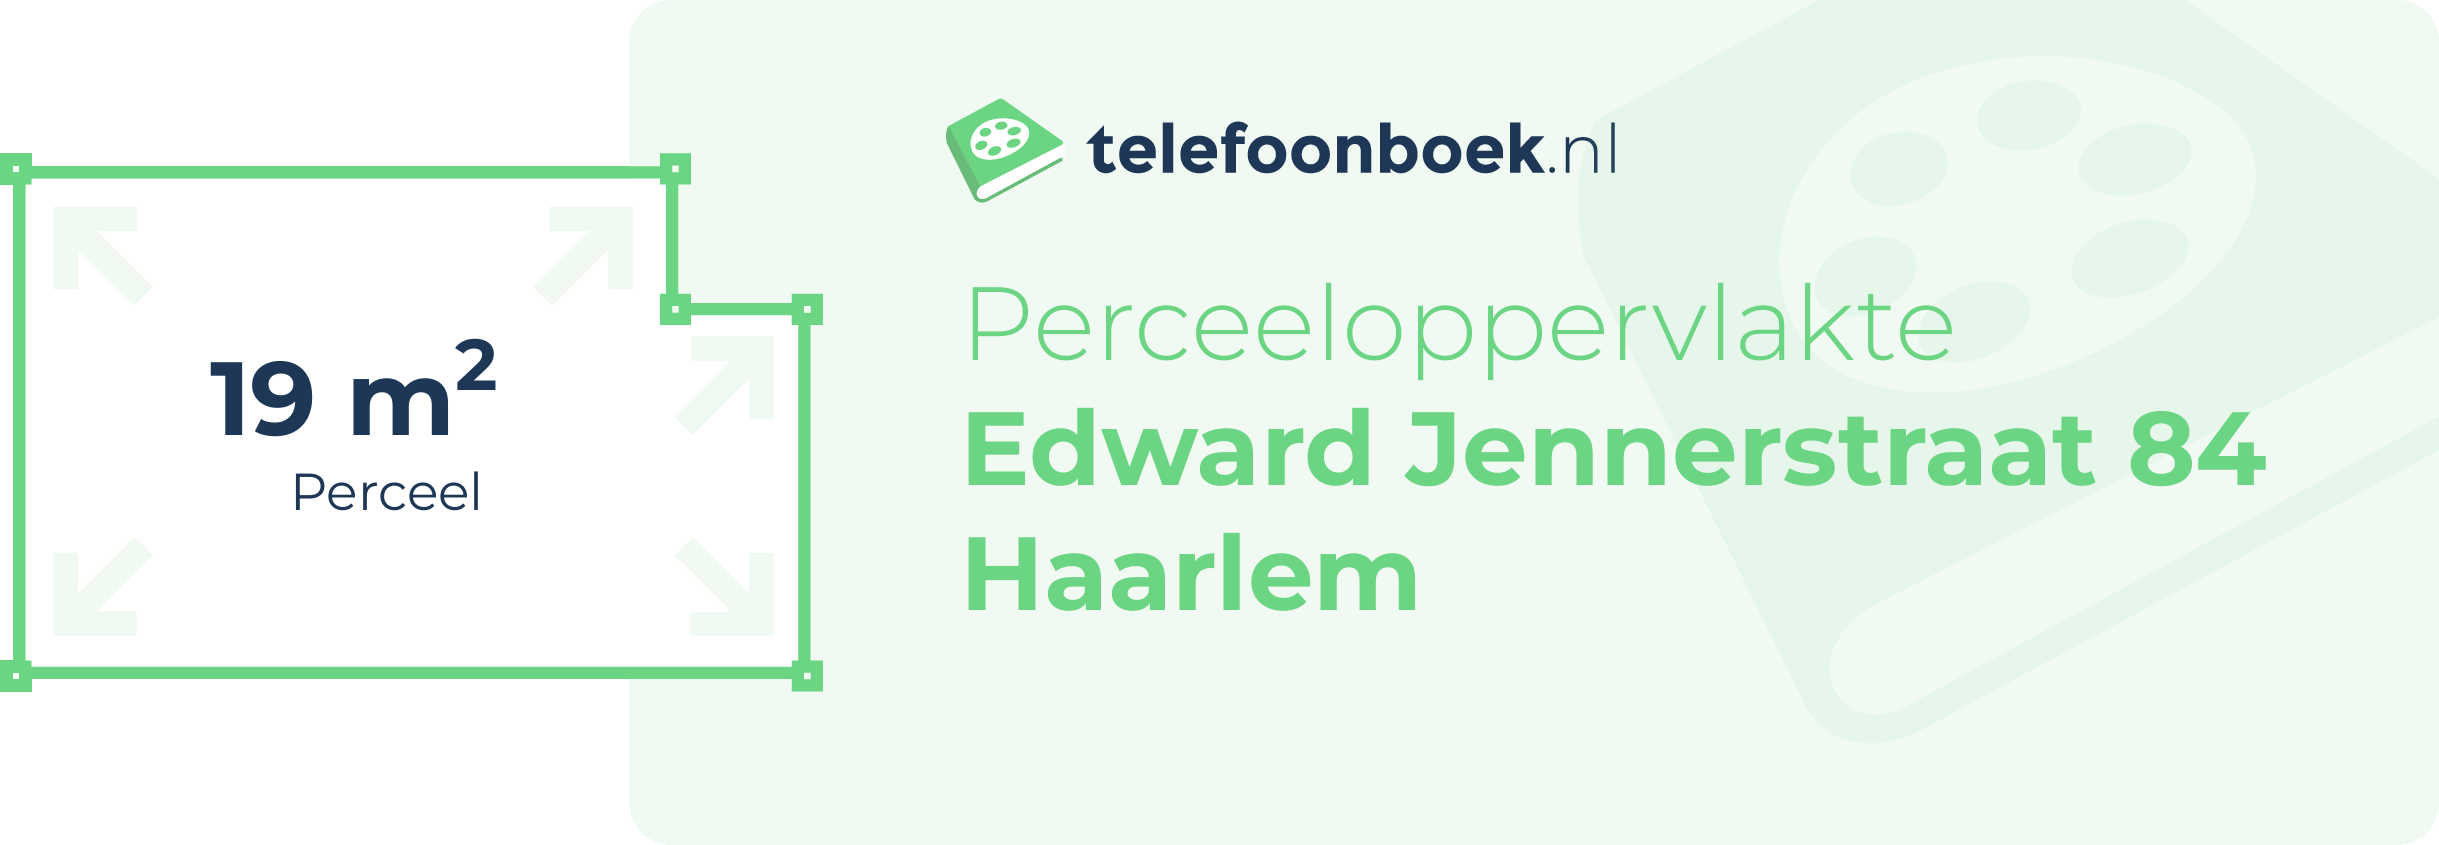 Perceeloppervlakte Edward Jennerstraat 84 Haarlem